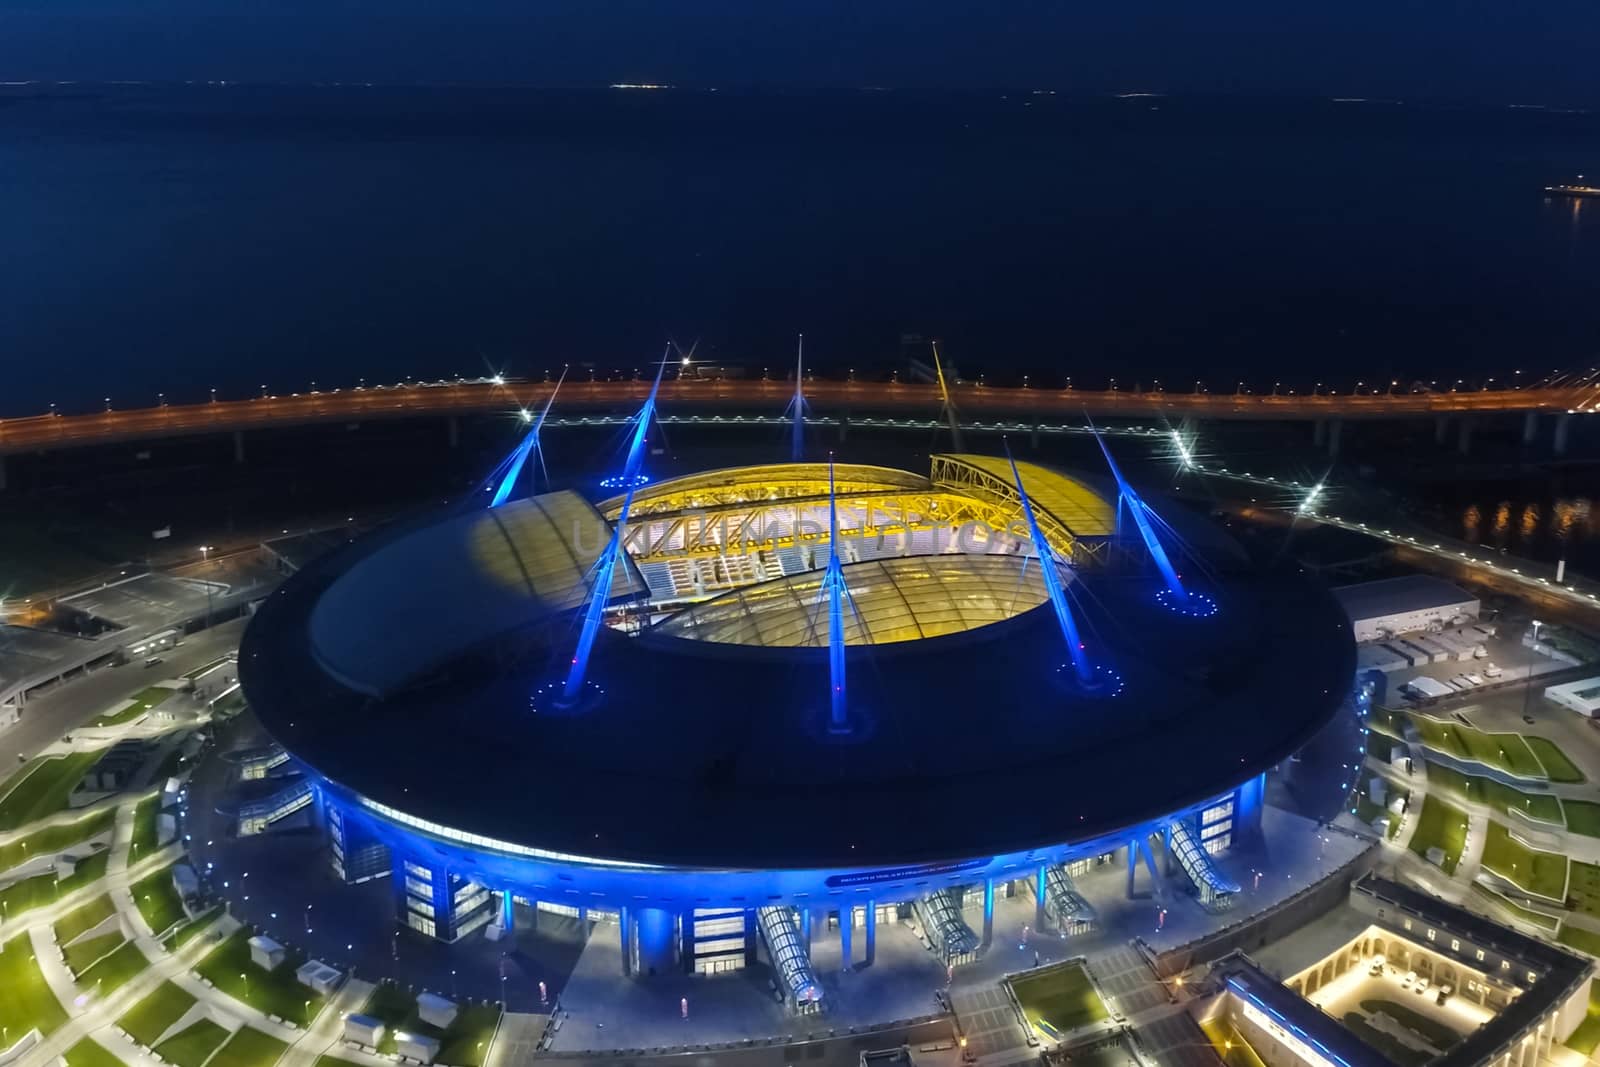 Stadium Zenith Arena at night. Illuminated by multi-colored lights the stadium at night. by nyrok